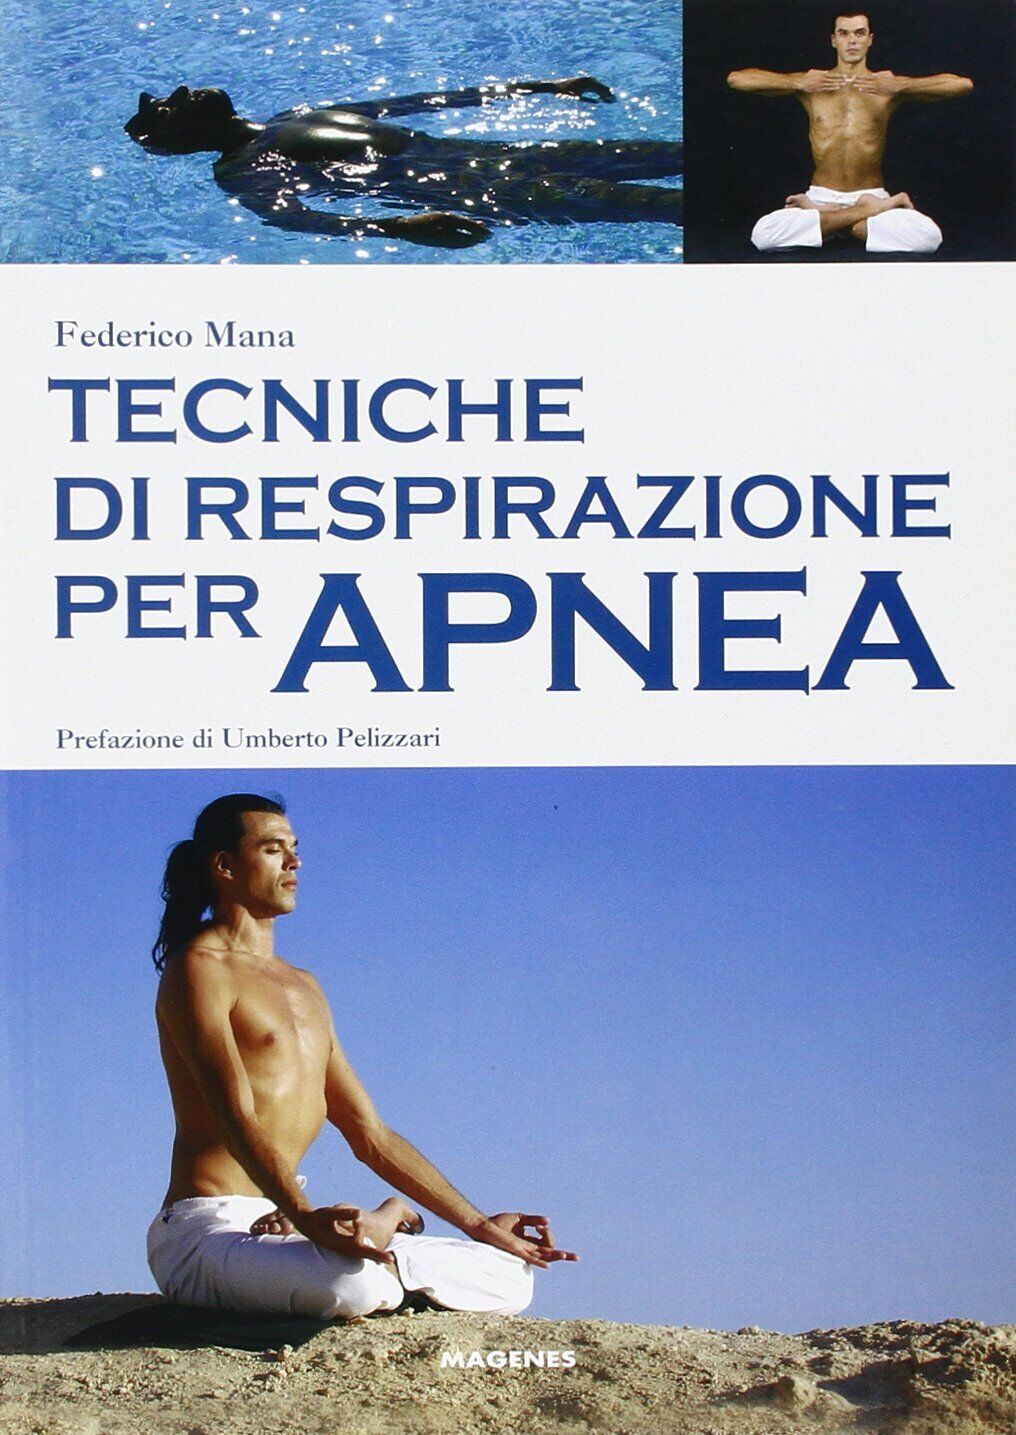 Tecniche di respirazione per apnea - Federico Mana - Megenes, 2008